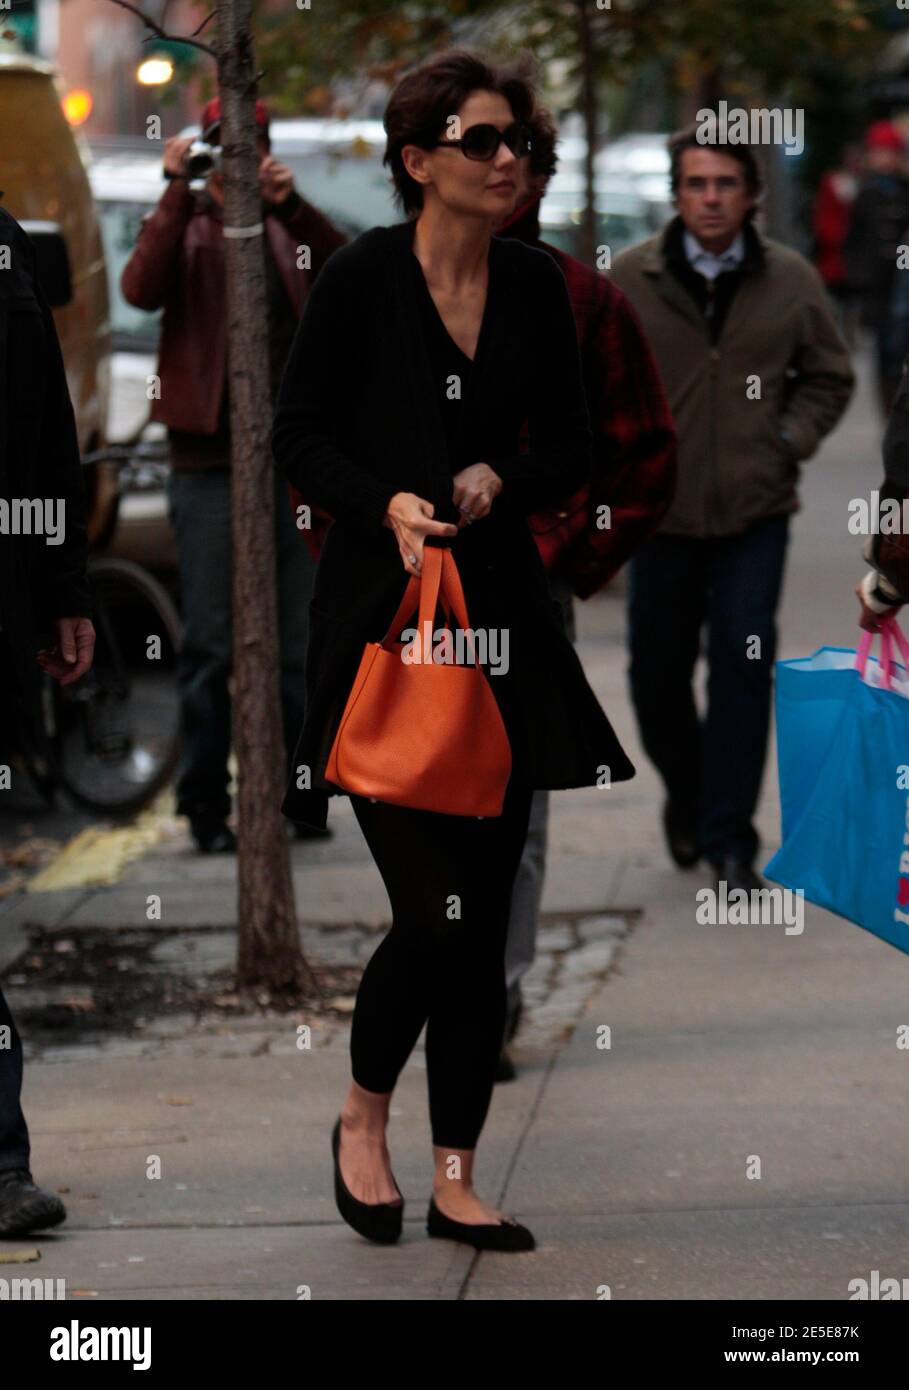 U.S actress Katie Holmes leaves her apartment in New York City, NY, USA on october 29, 2008. Photos by Nikola Kis derdei-GuÀrin - CauABACAPRESS.COM Stock Photo